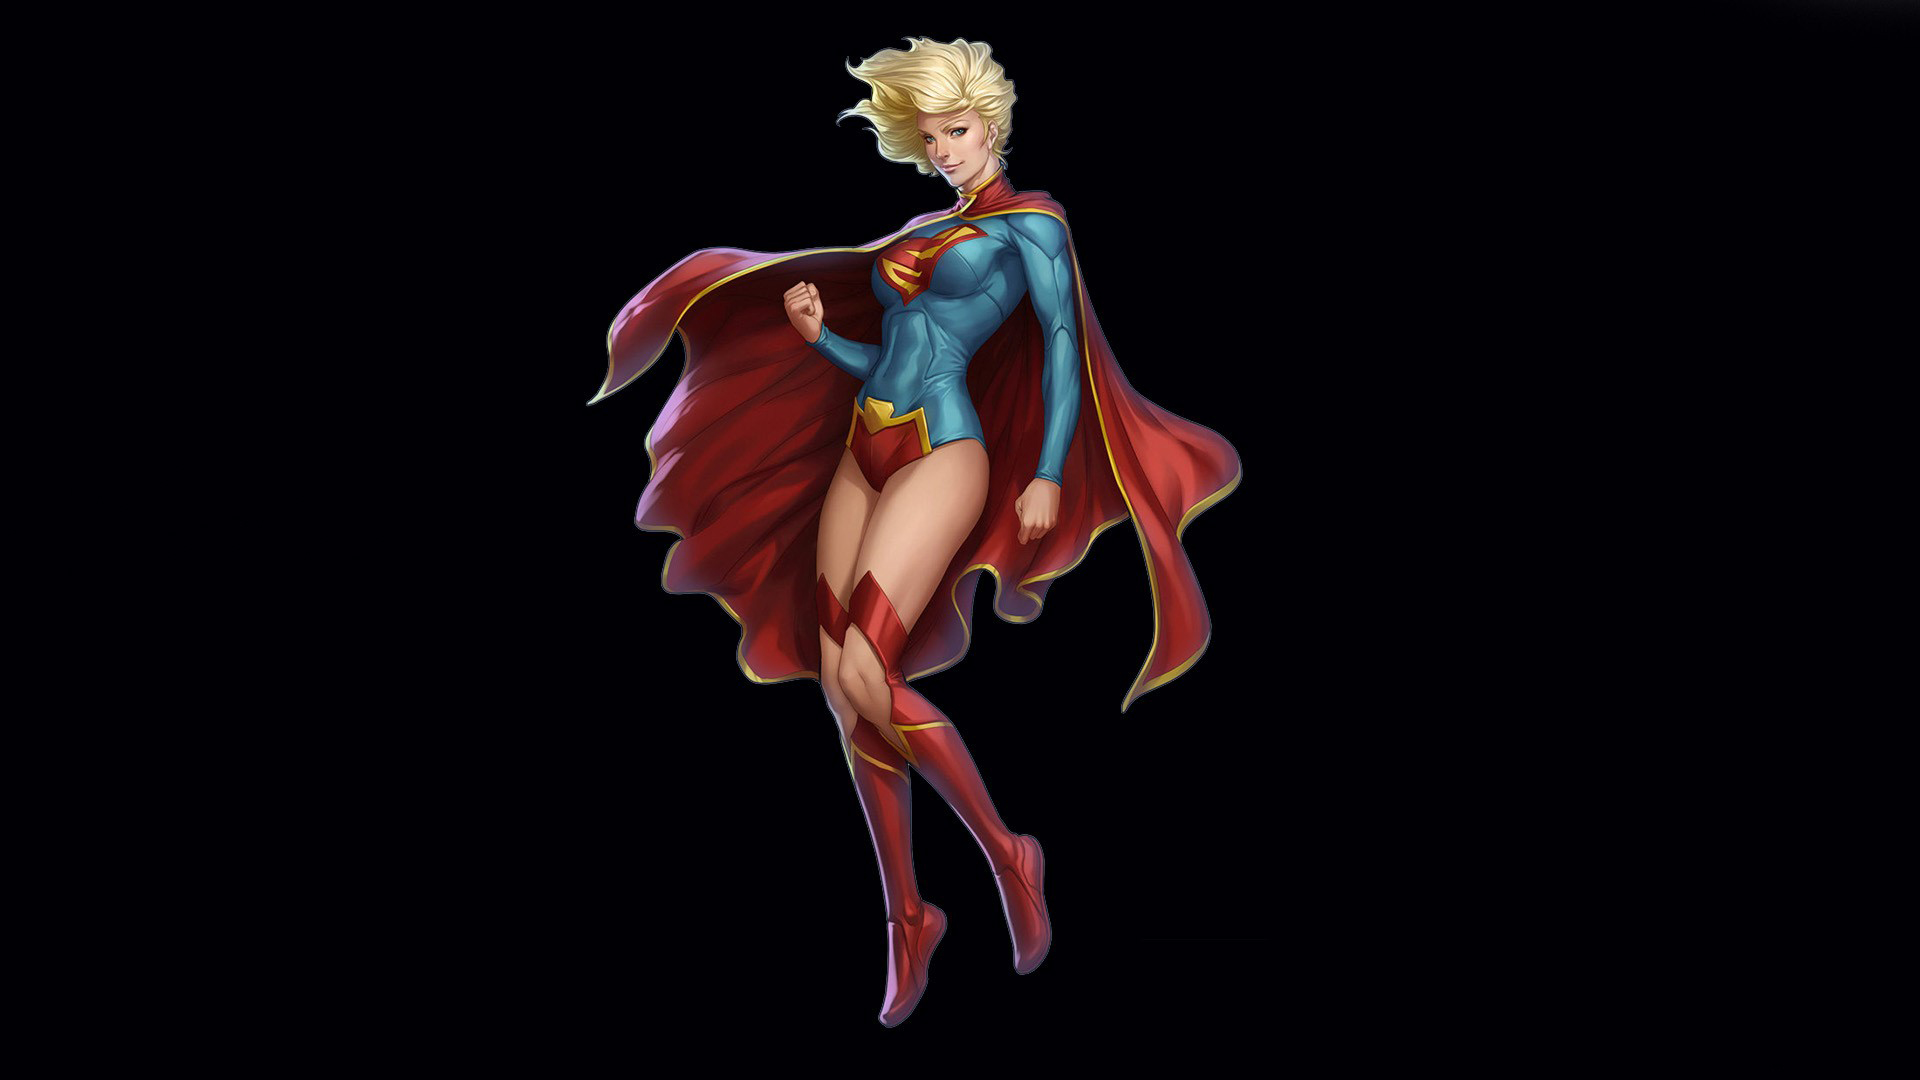 General 1920x1080 DC Comics artwork Supergirl superheroines black background fantasy art blonde women legs cape simple background boots fantasy girl